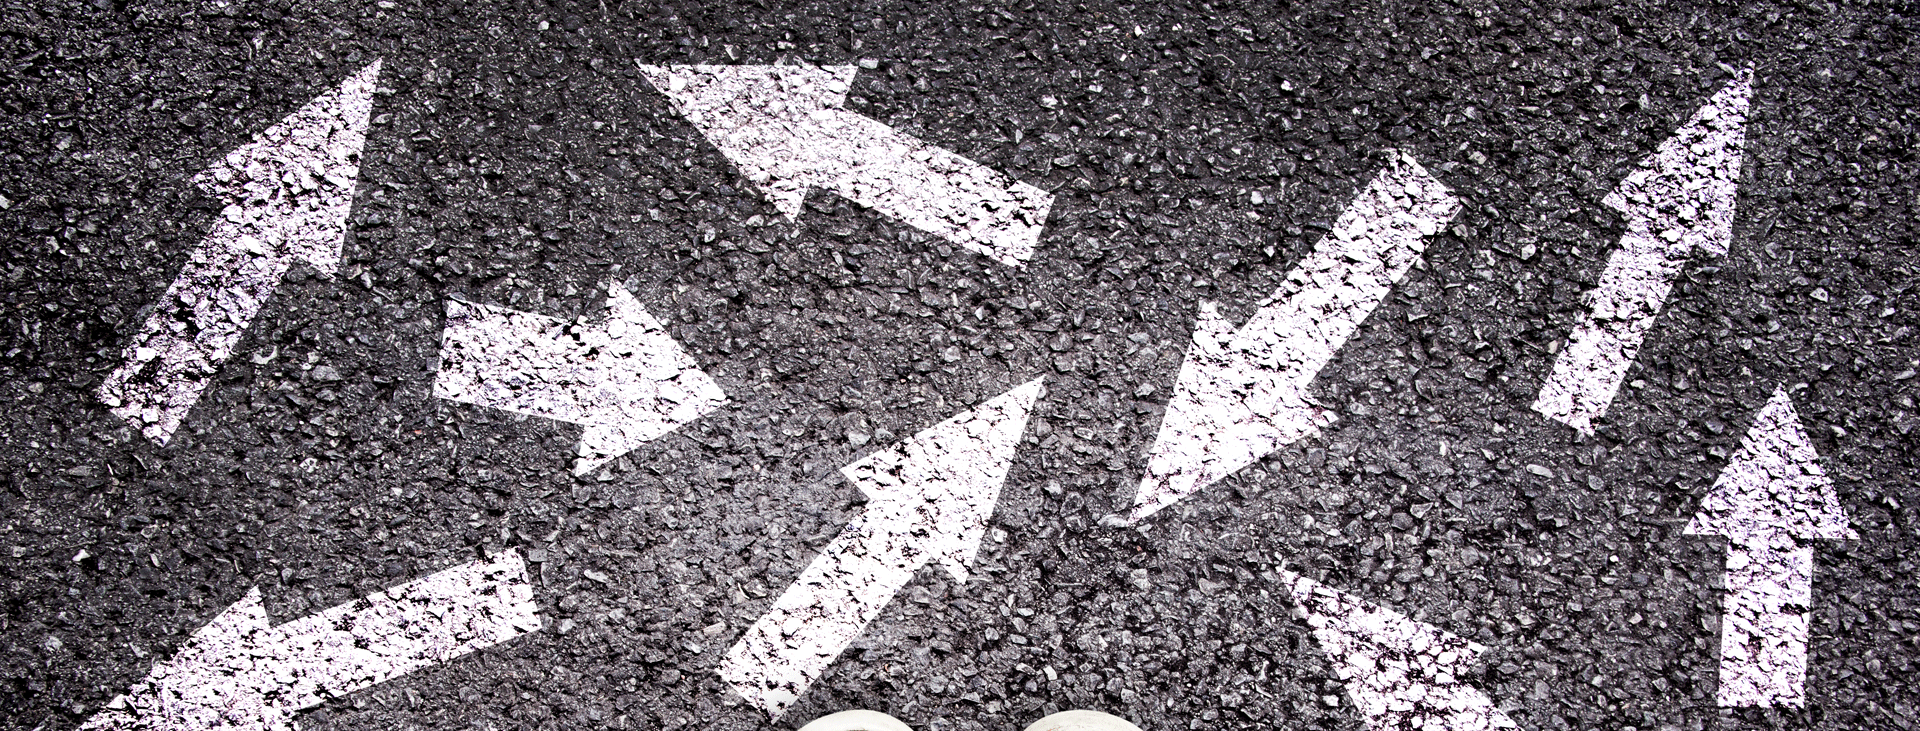 Random arrows chalked on asphalt